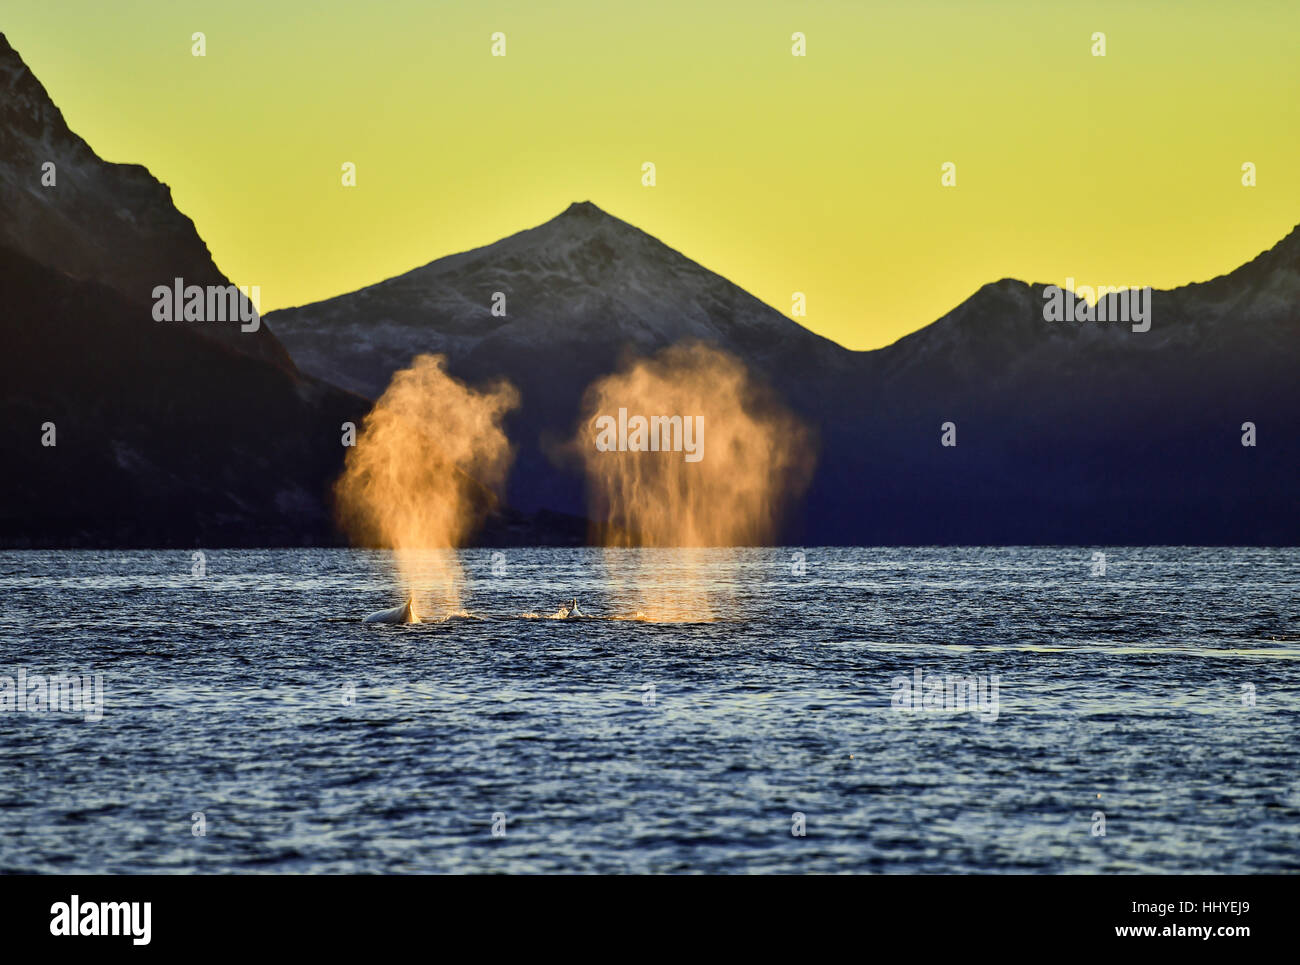 Orcas (Orcinus orca) blowing, sunset, mountains at back, Kaldfjorden, Tromvik, Norway Stock Photo